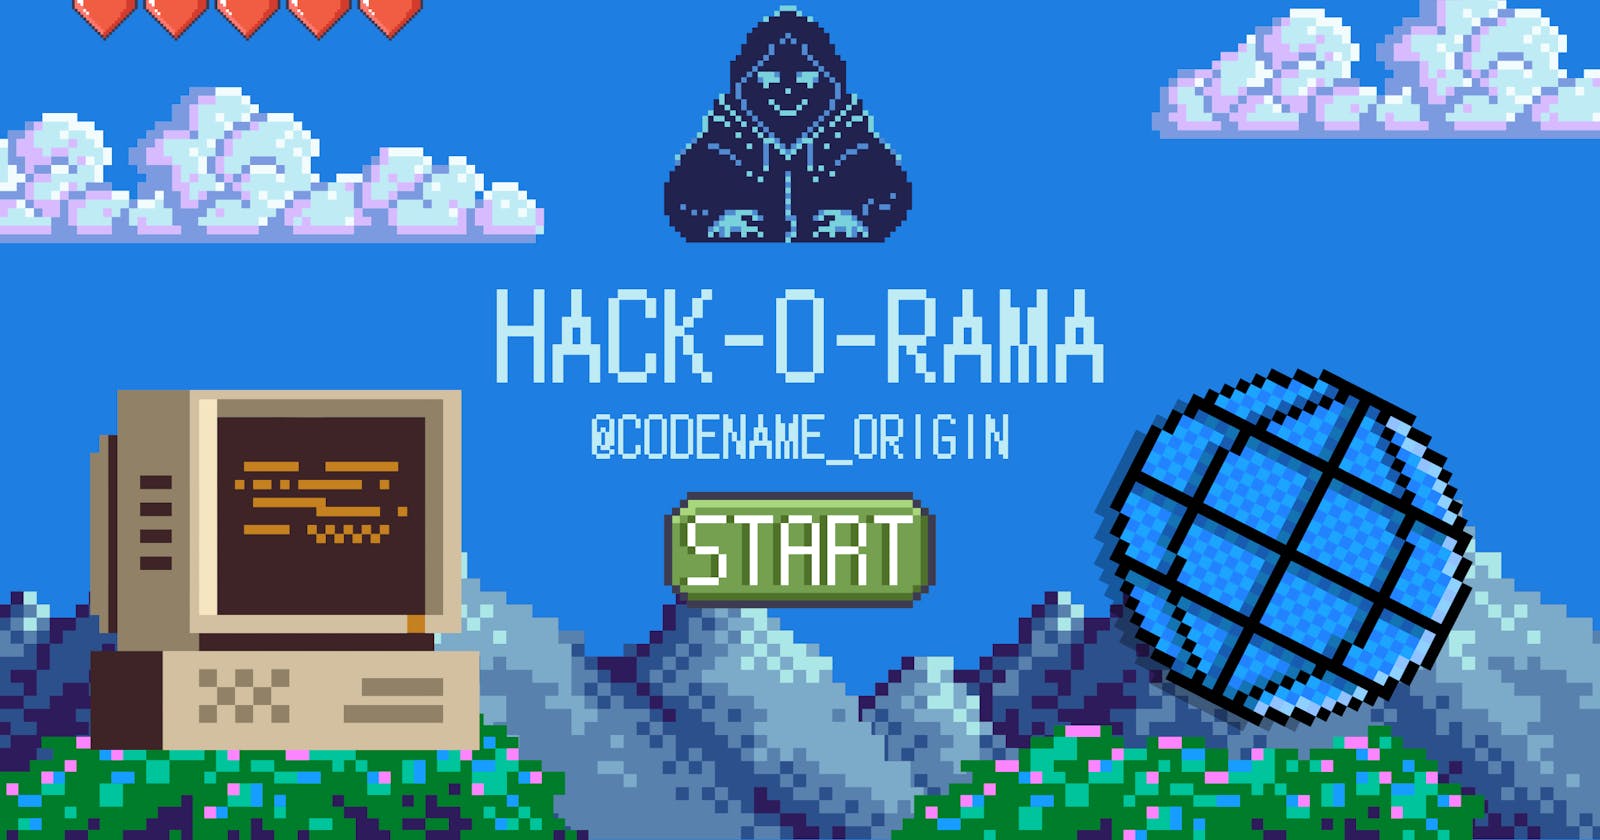 Hack-O-Rama: The Annual Web Development Hackathon for beginners